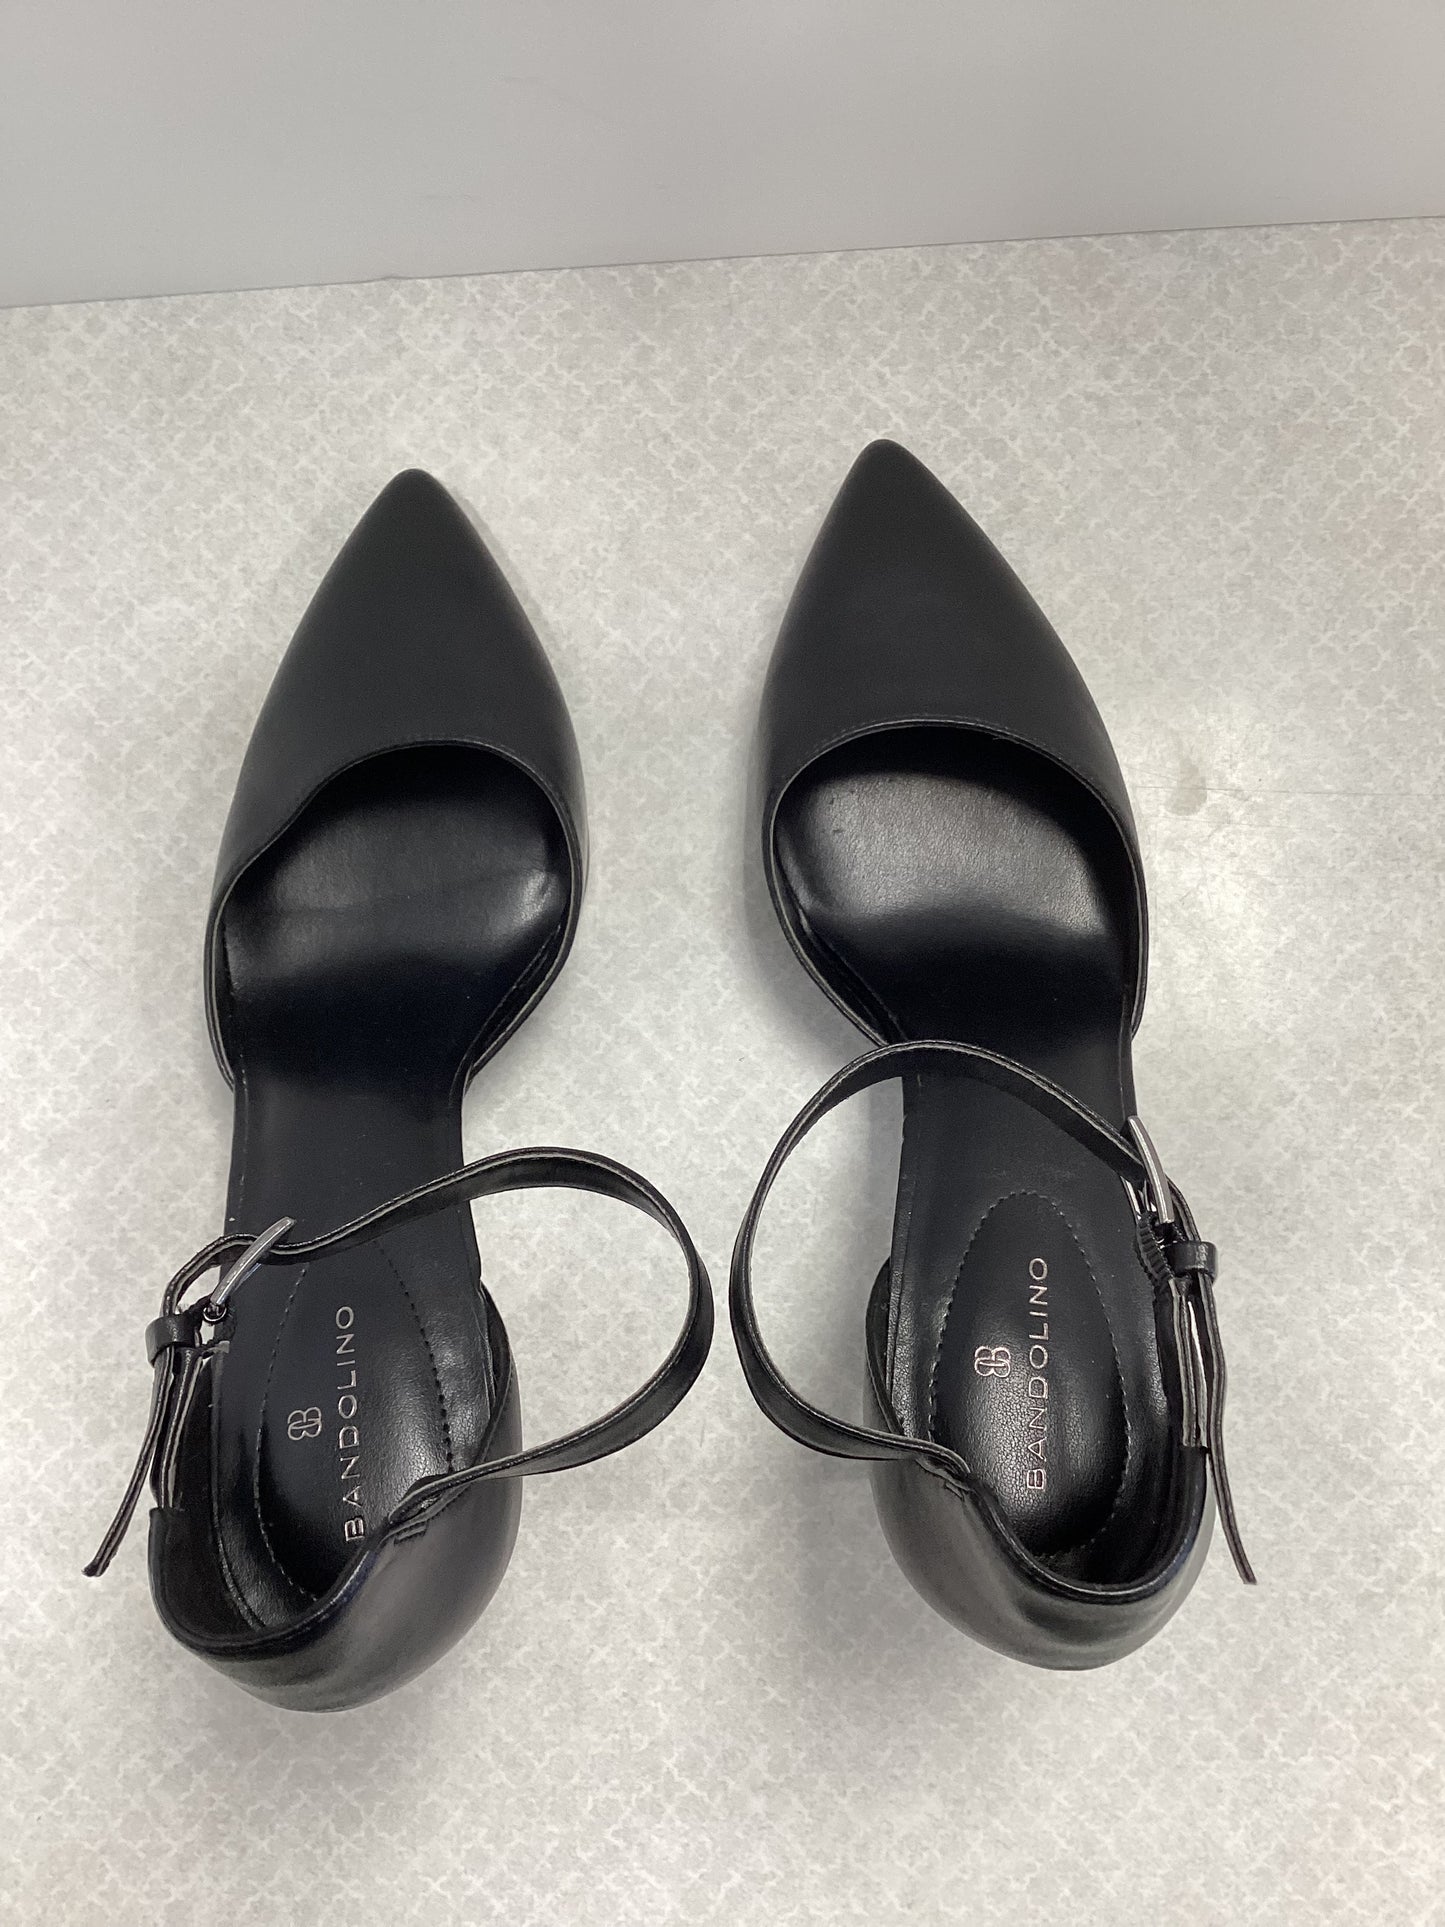 Shoes Heels Stiletto By Bandolino  Size: 10